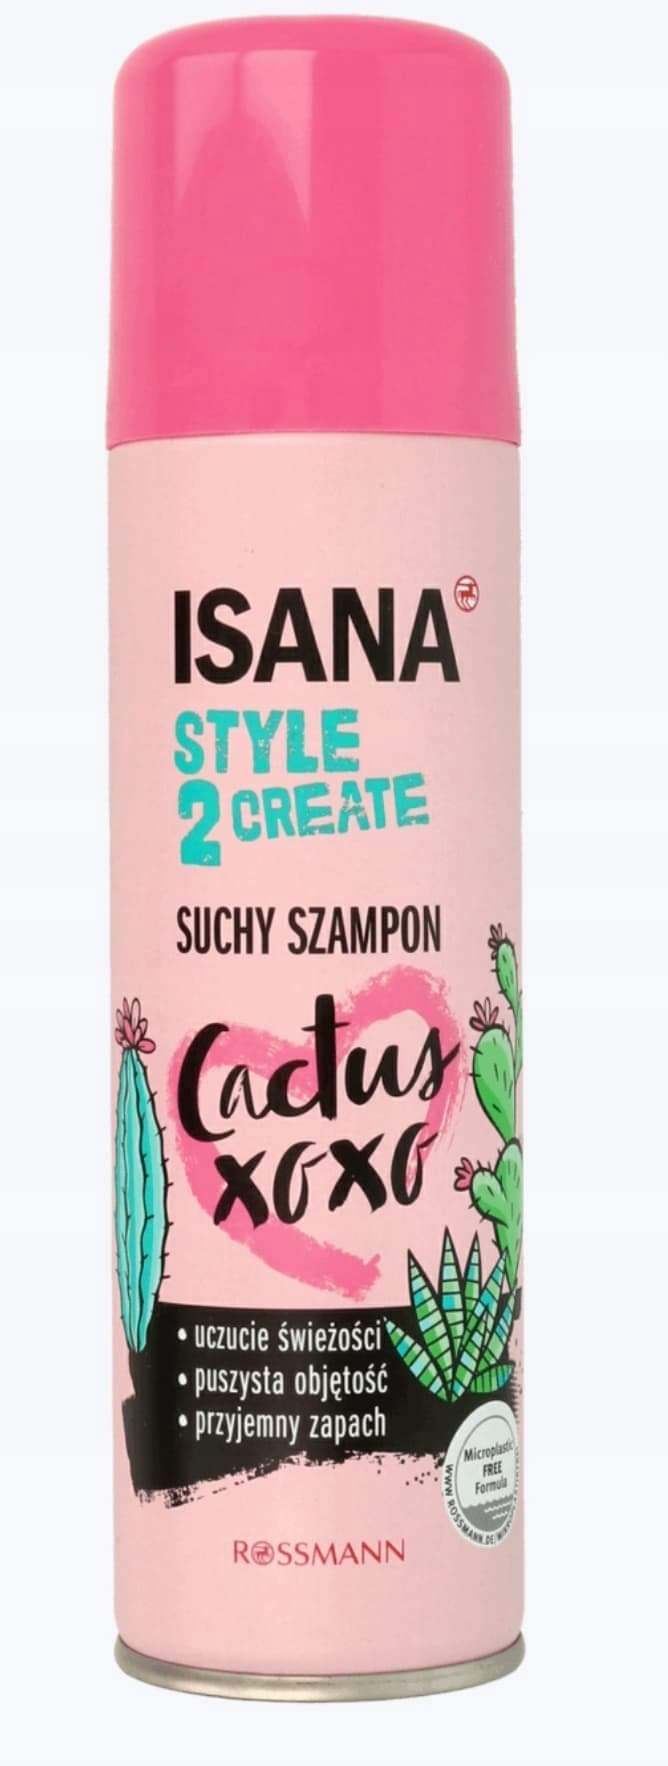 isana style create 2 suchy szampon